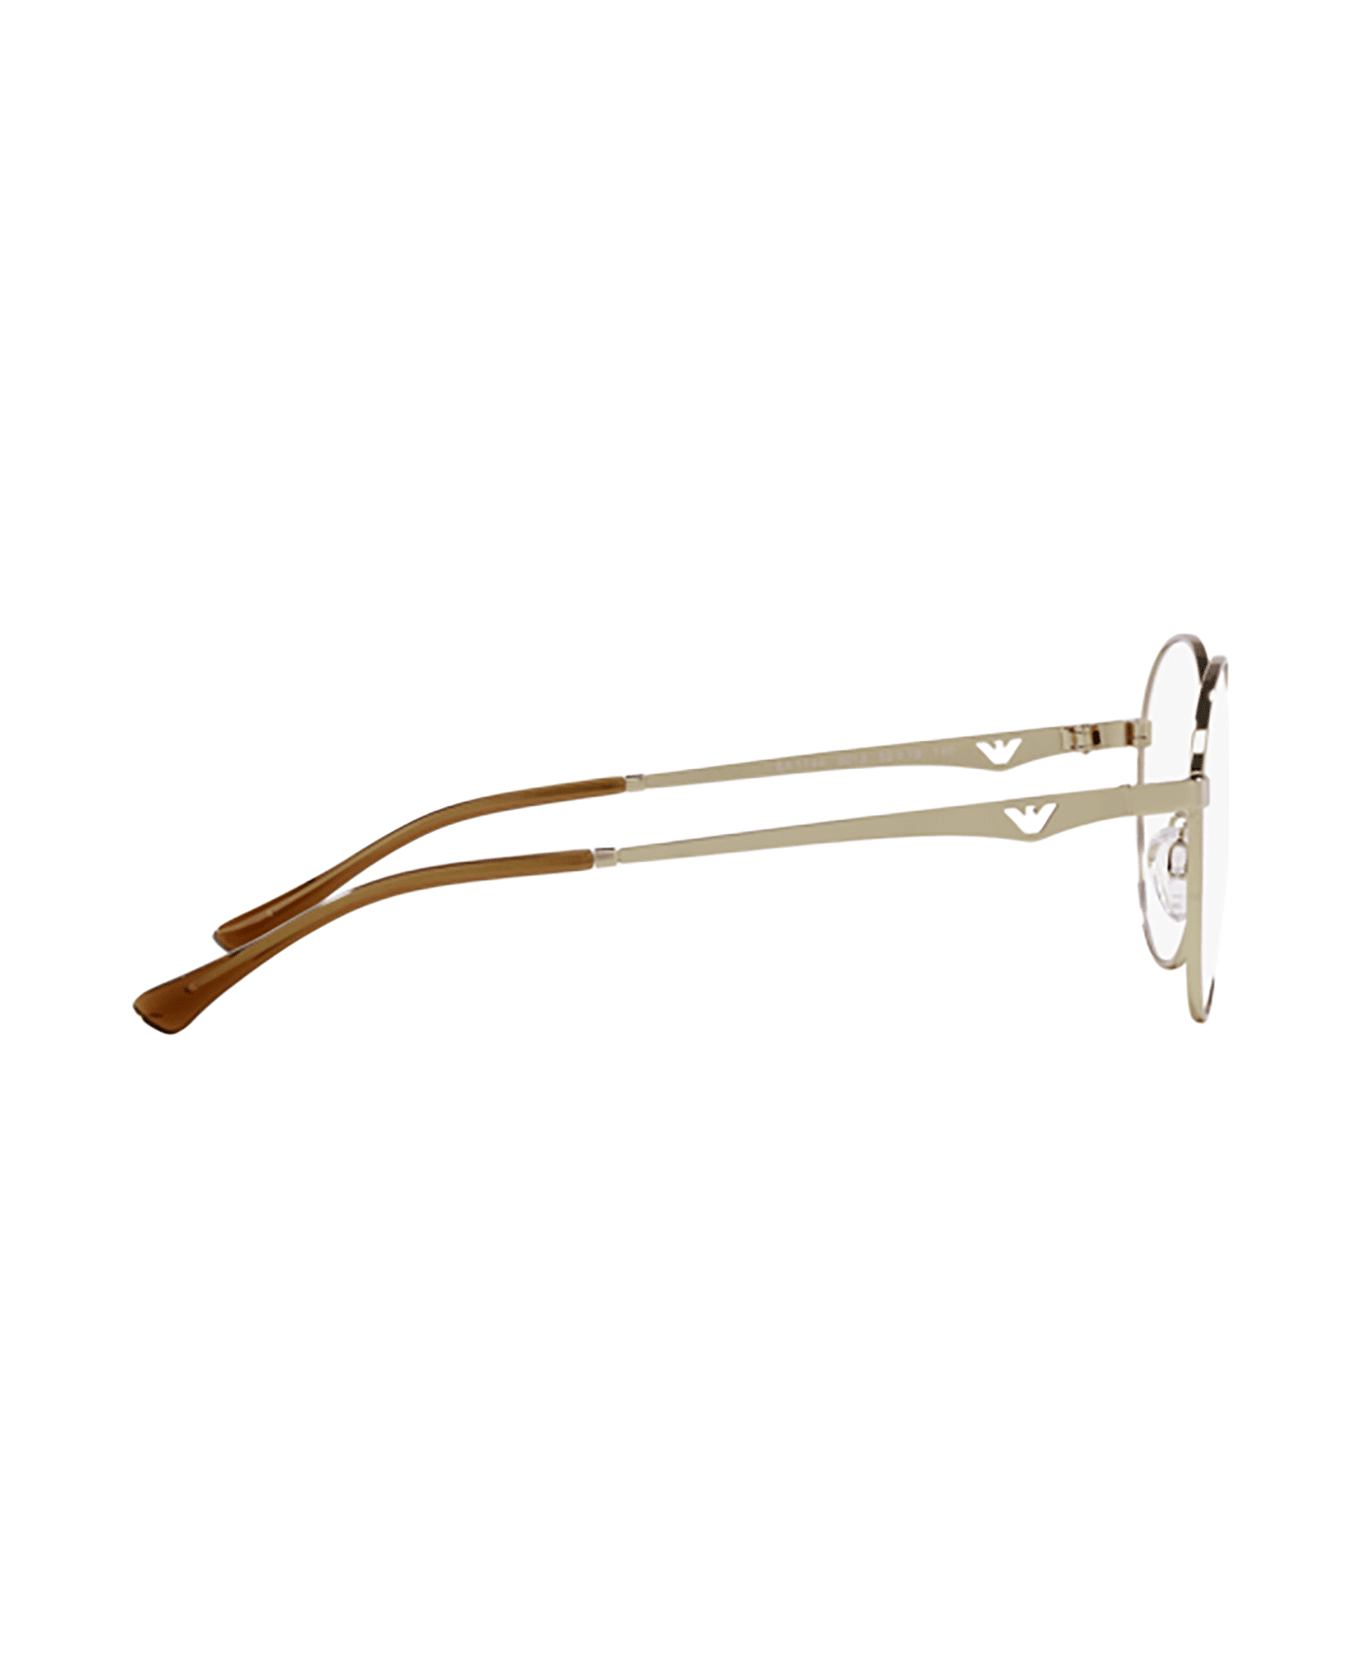 Emporio Armani Ea1144 Shiny Pale Gold Glasses - Shiny Pale Gold アイウェア